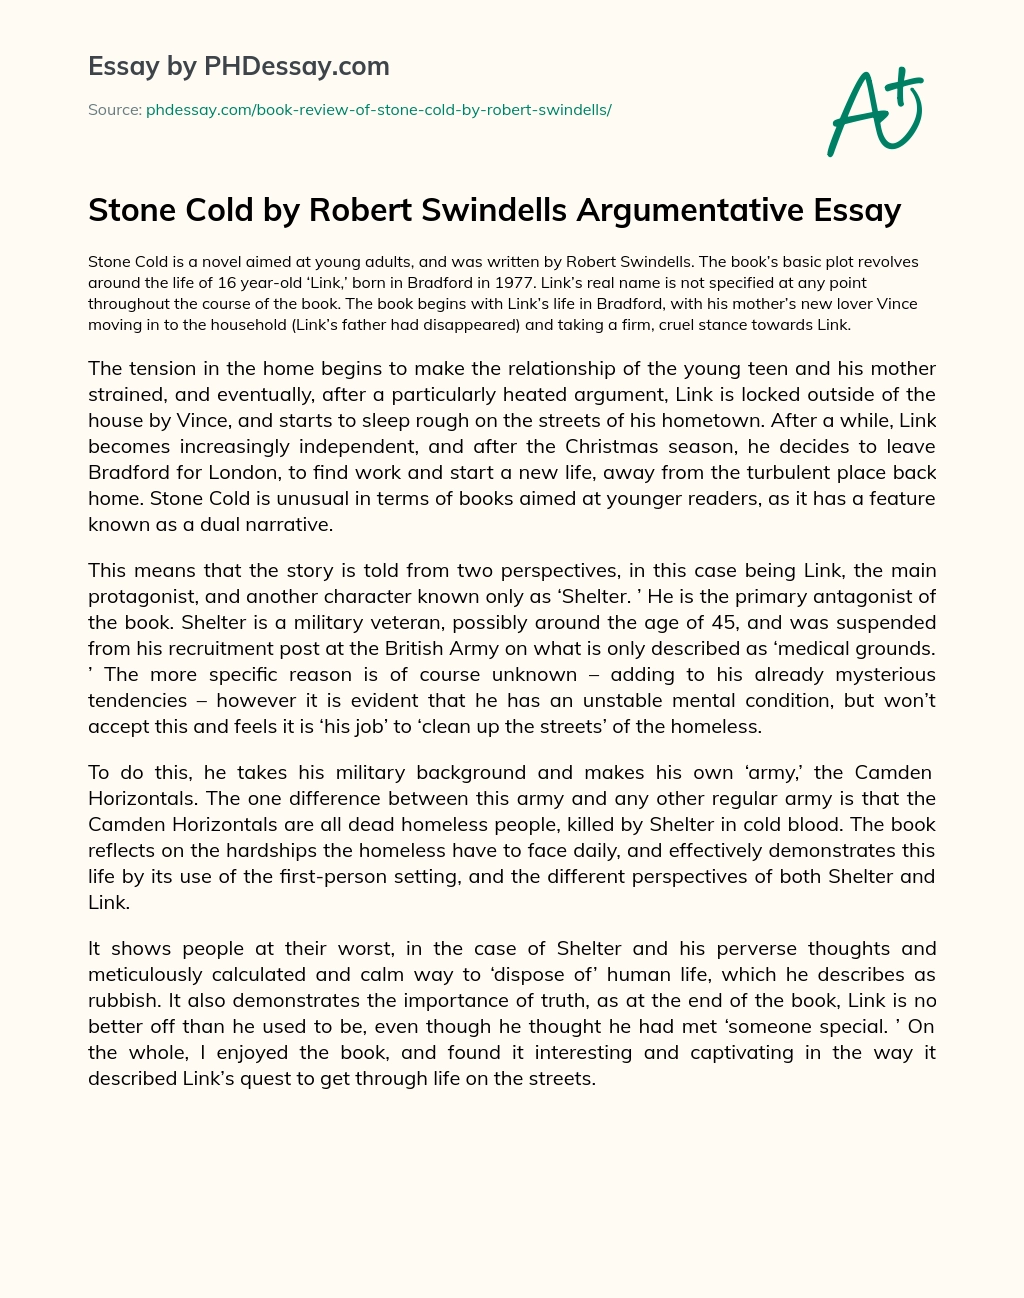 Stone Cold by Robert Swindells Argumentative Essay essay